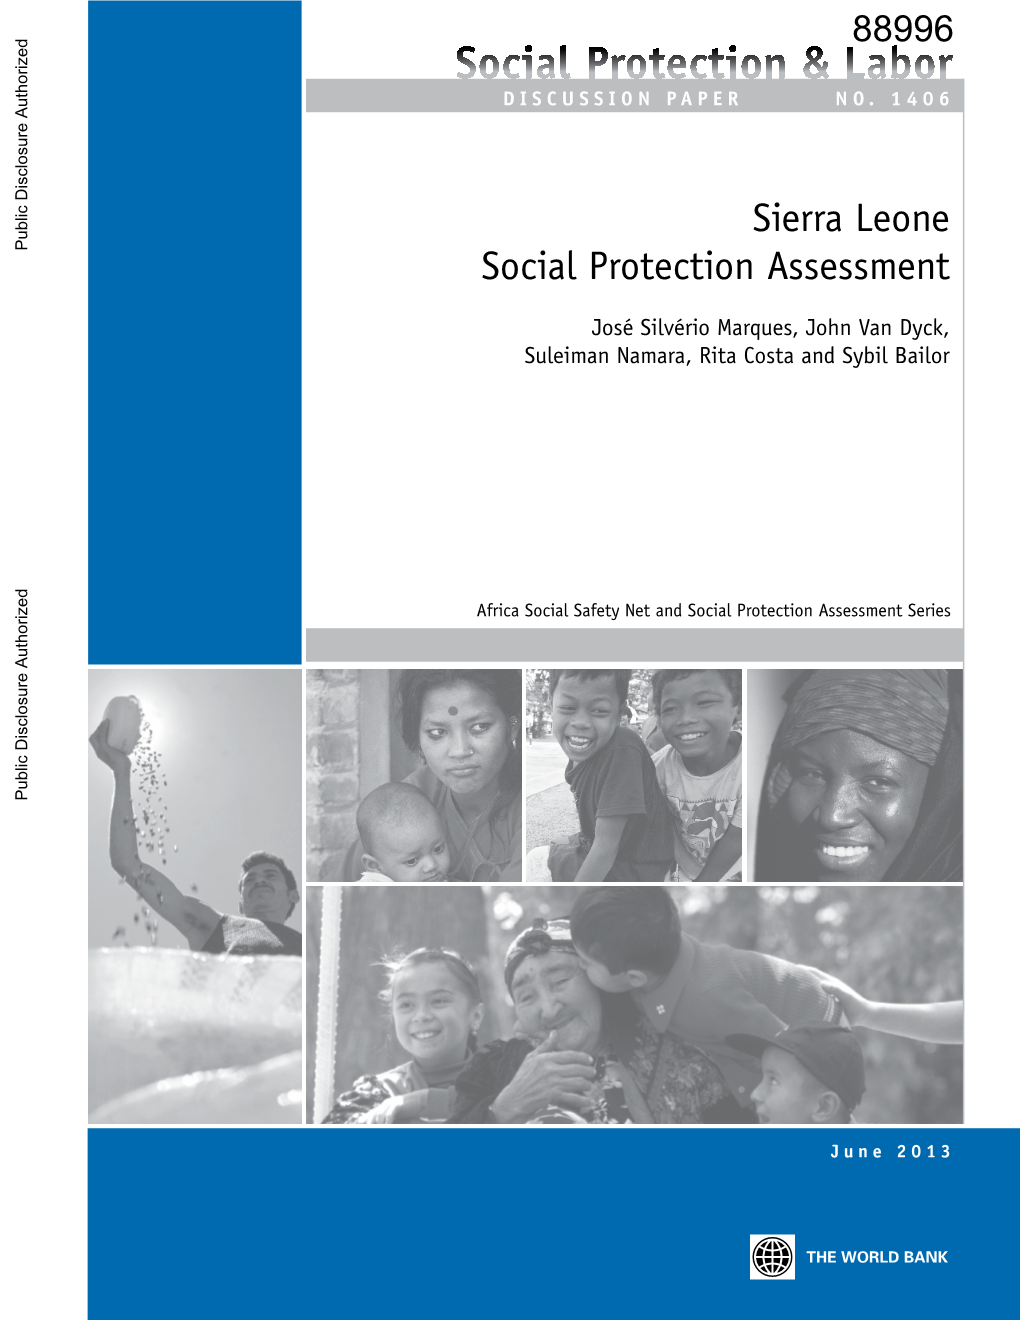 Sierra Leone Social Protection Assessment Program Questionnaire